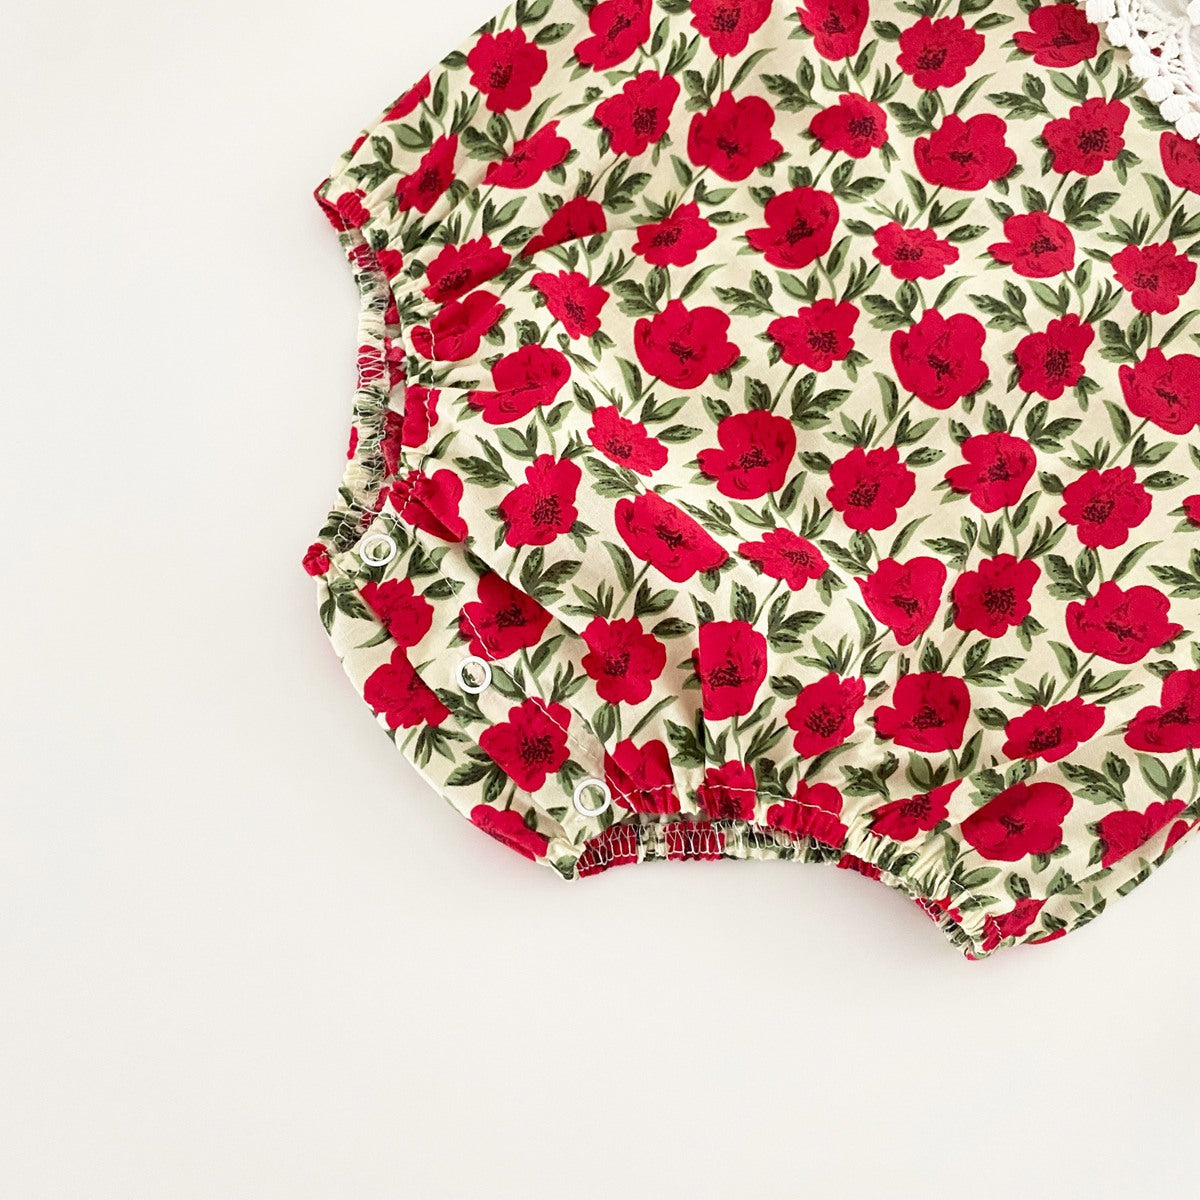 Baby Girl Flower Pattern Labeled Collar Design Long Sleeve Bodysuit My Kids-USA